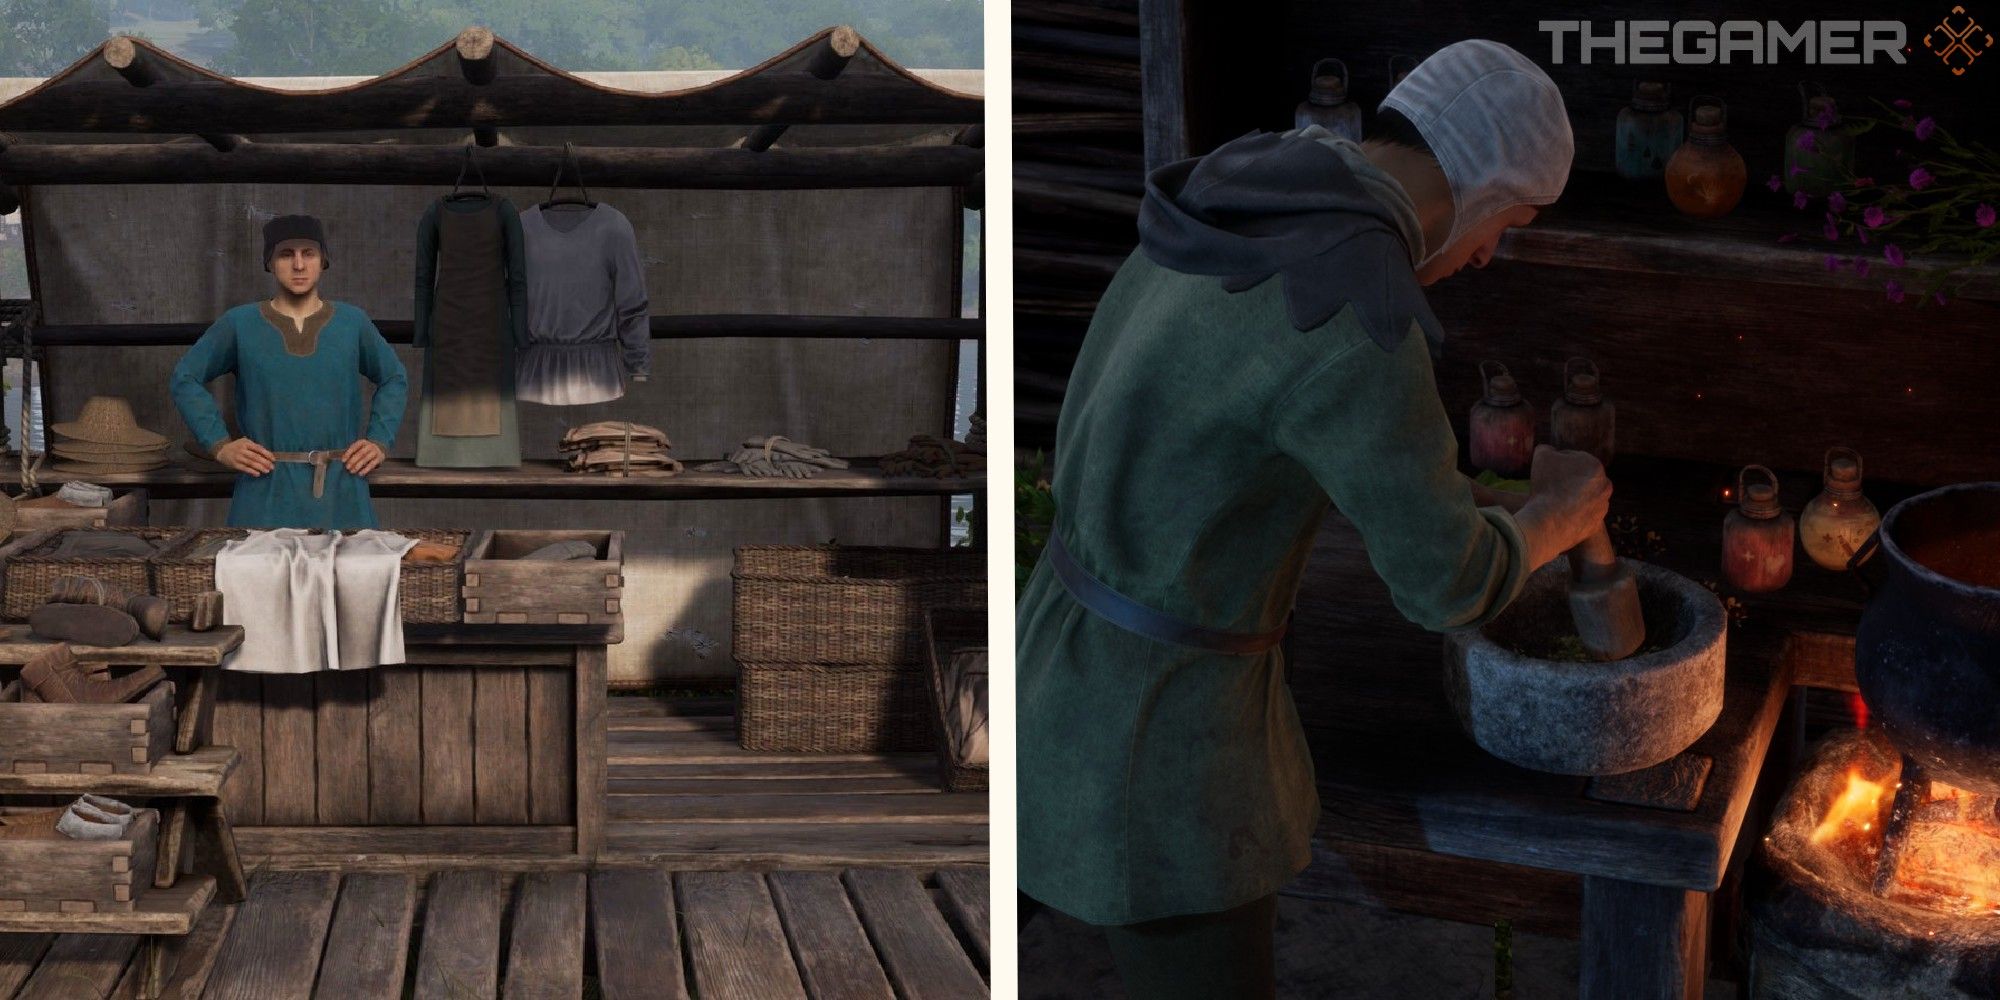 image of vendor next to image of herbalist working